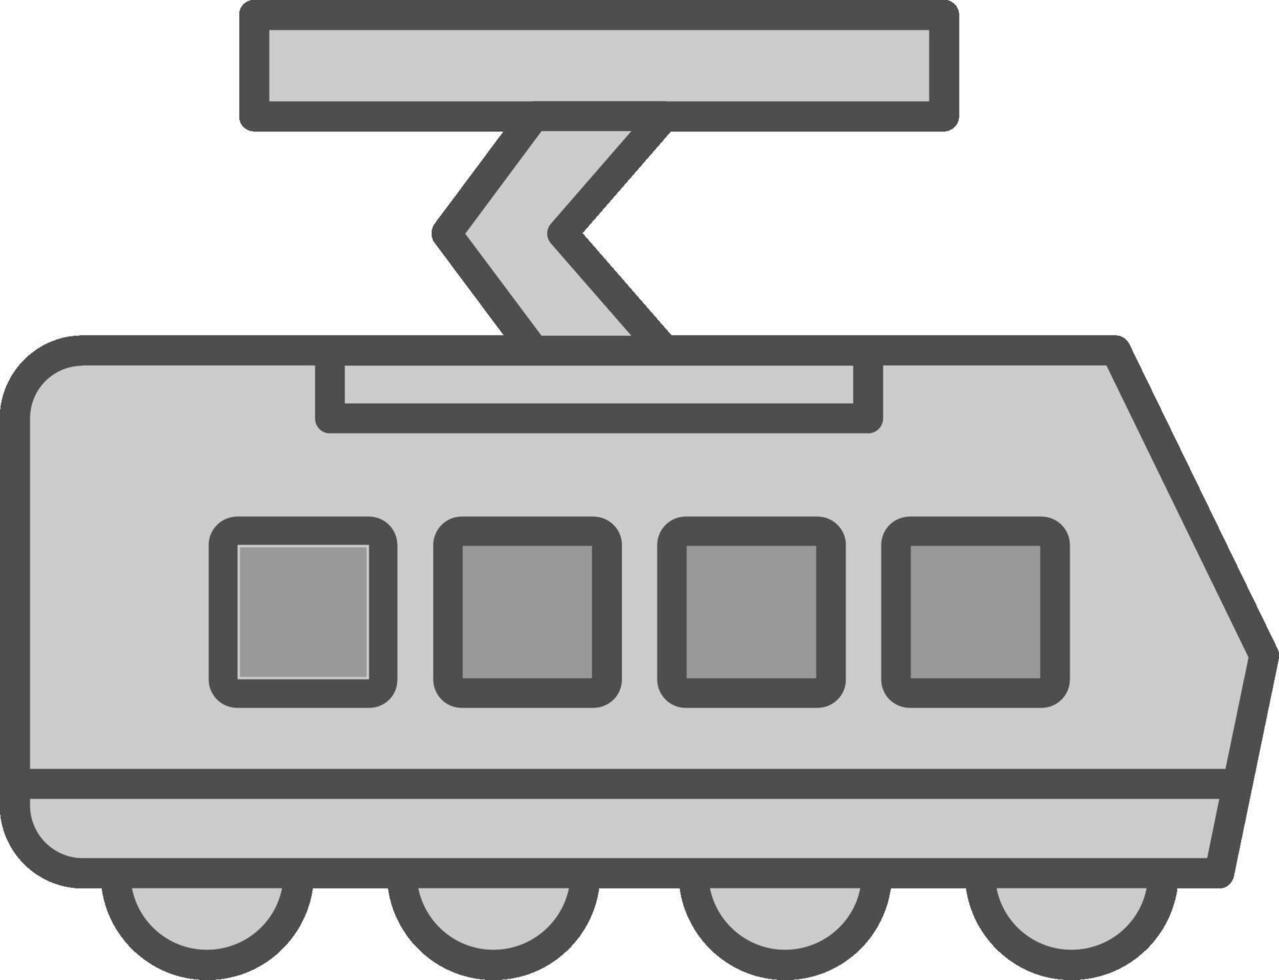 Straßenbahn Linie gefüllt Graustufen Symbol Design vektor